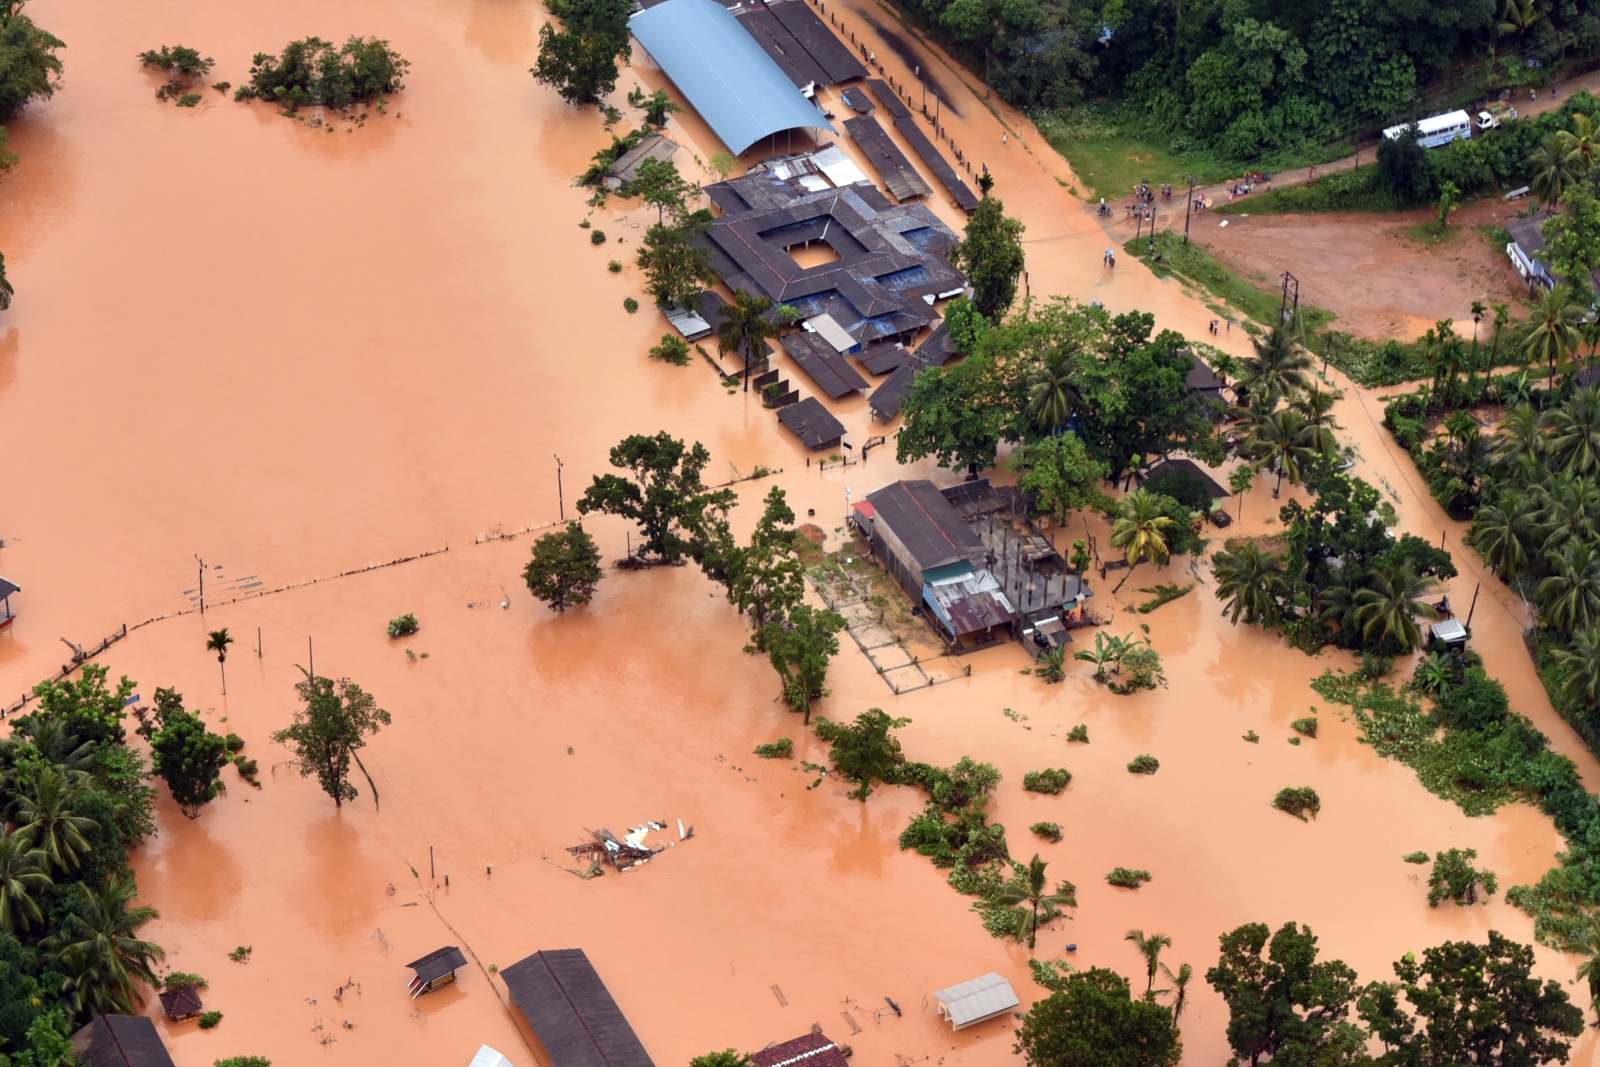 Powodzie na Sri Lance.
Fot. PAP/EPA/SRI LANKA AIR FORCE